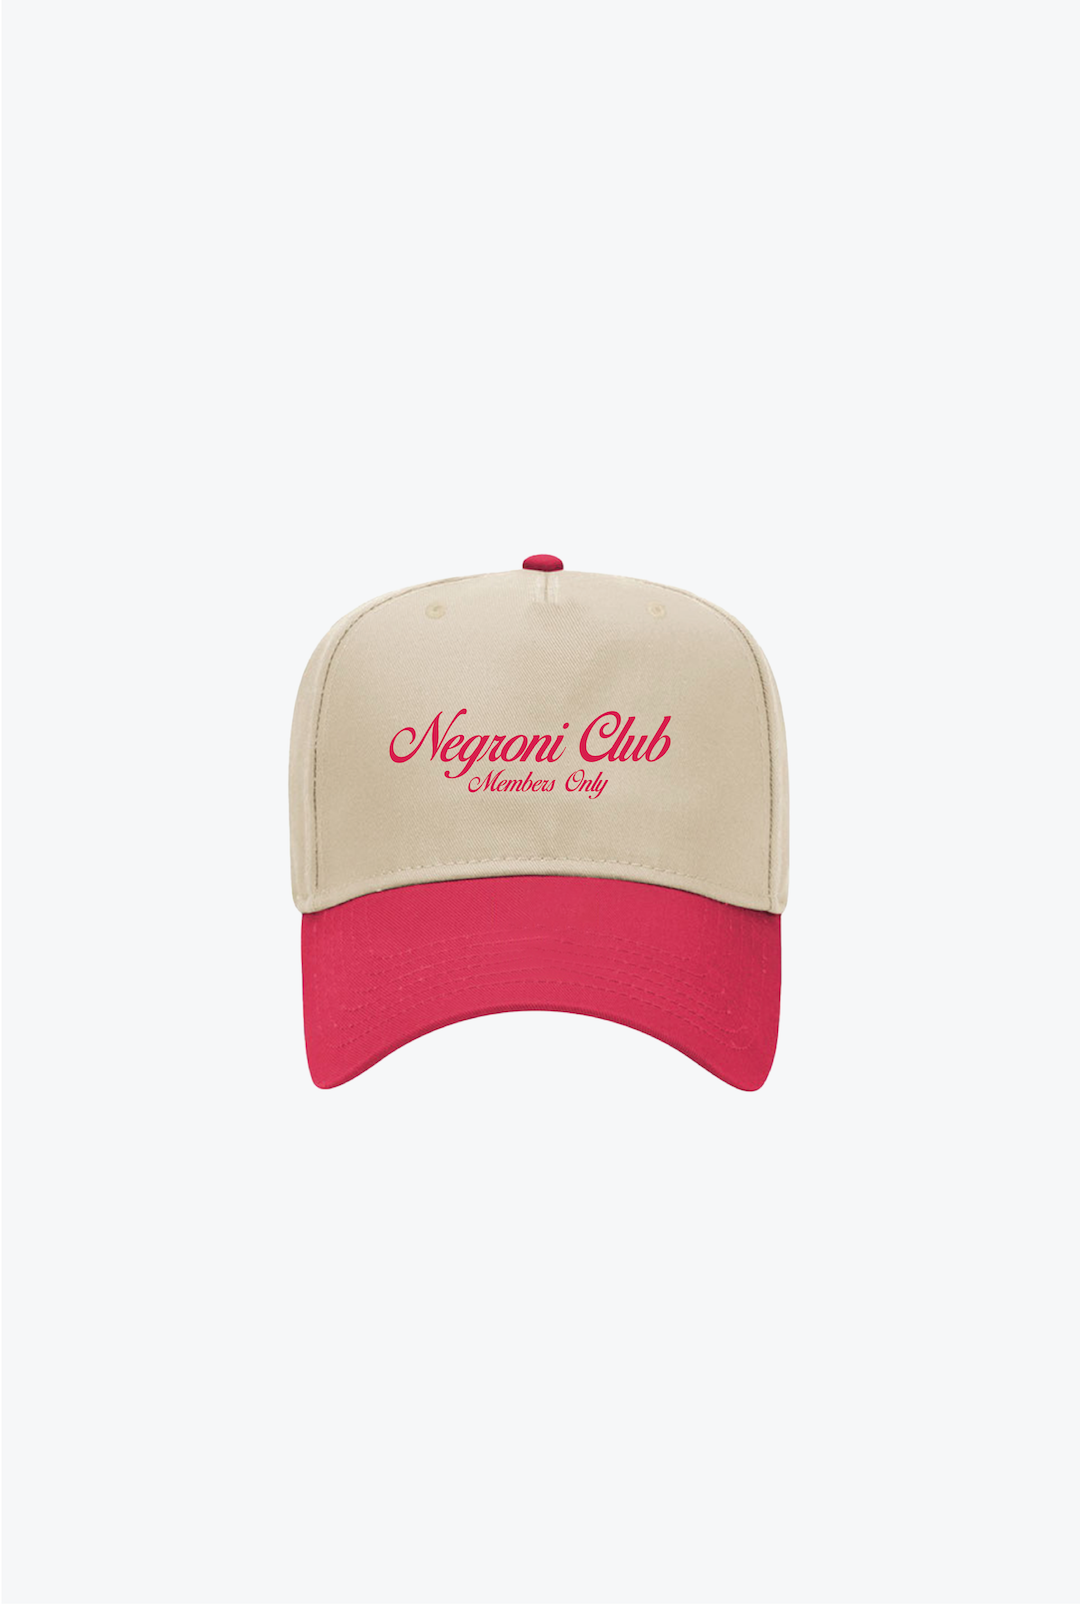 Negroni Club A-Frame Cap - Red/Khaki